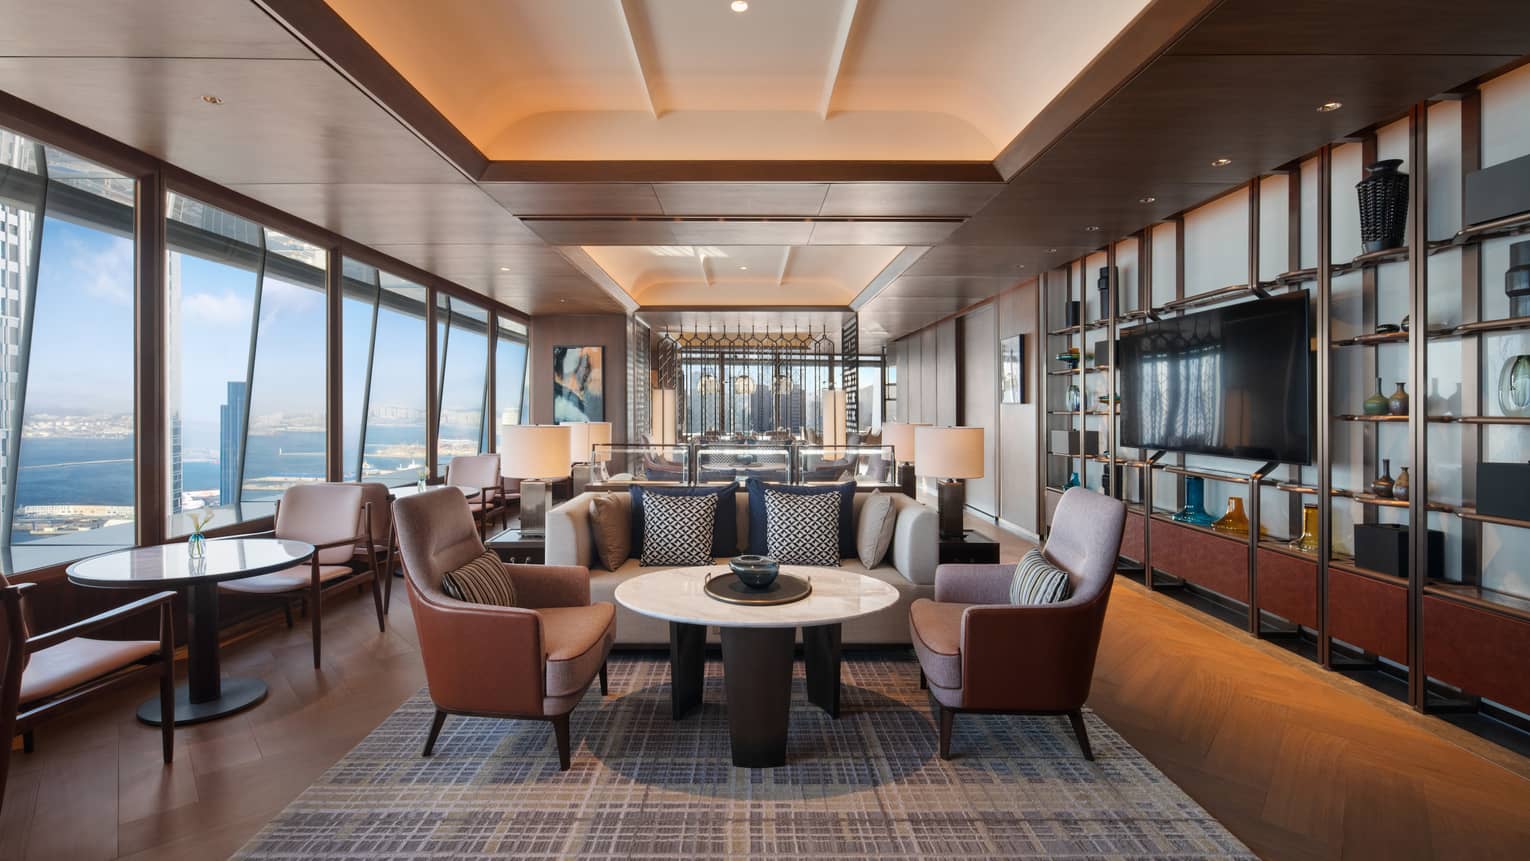 Sleek hotel executive lounge area with elevated city views of Dalian, China